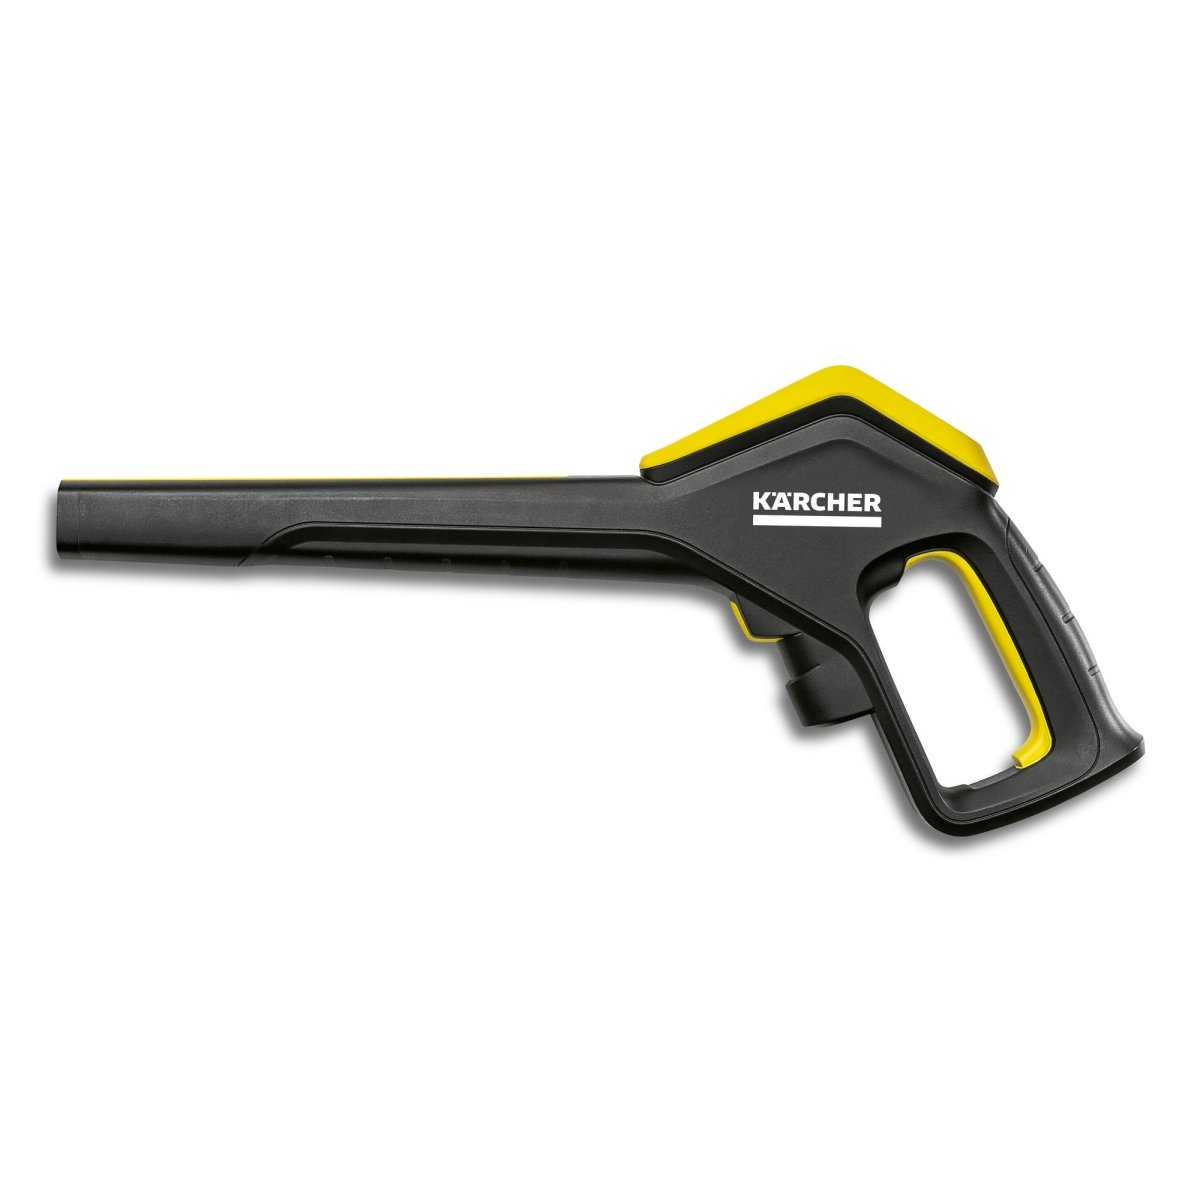 Pistola Full Control, compatible con K4 & K5 Full Control - KÄRCHER SHOP